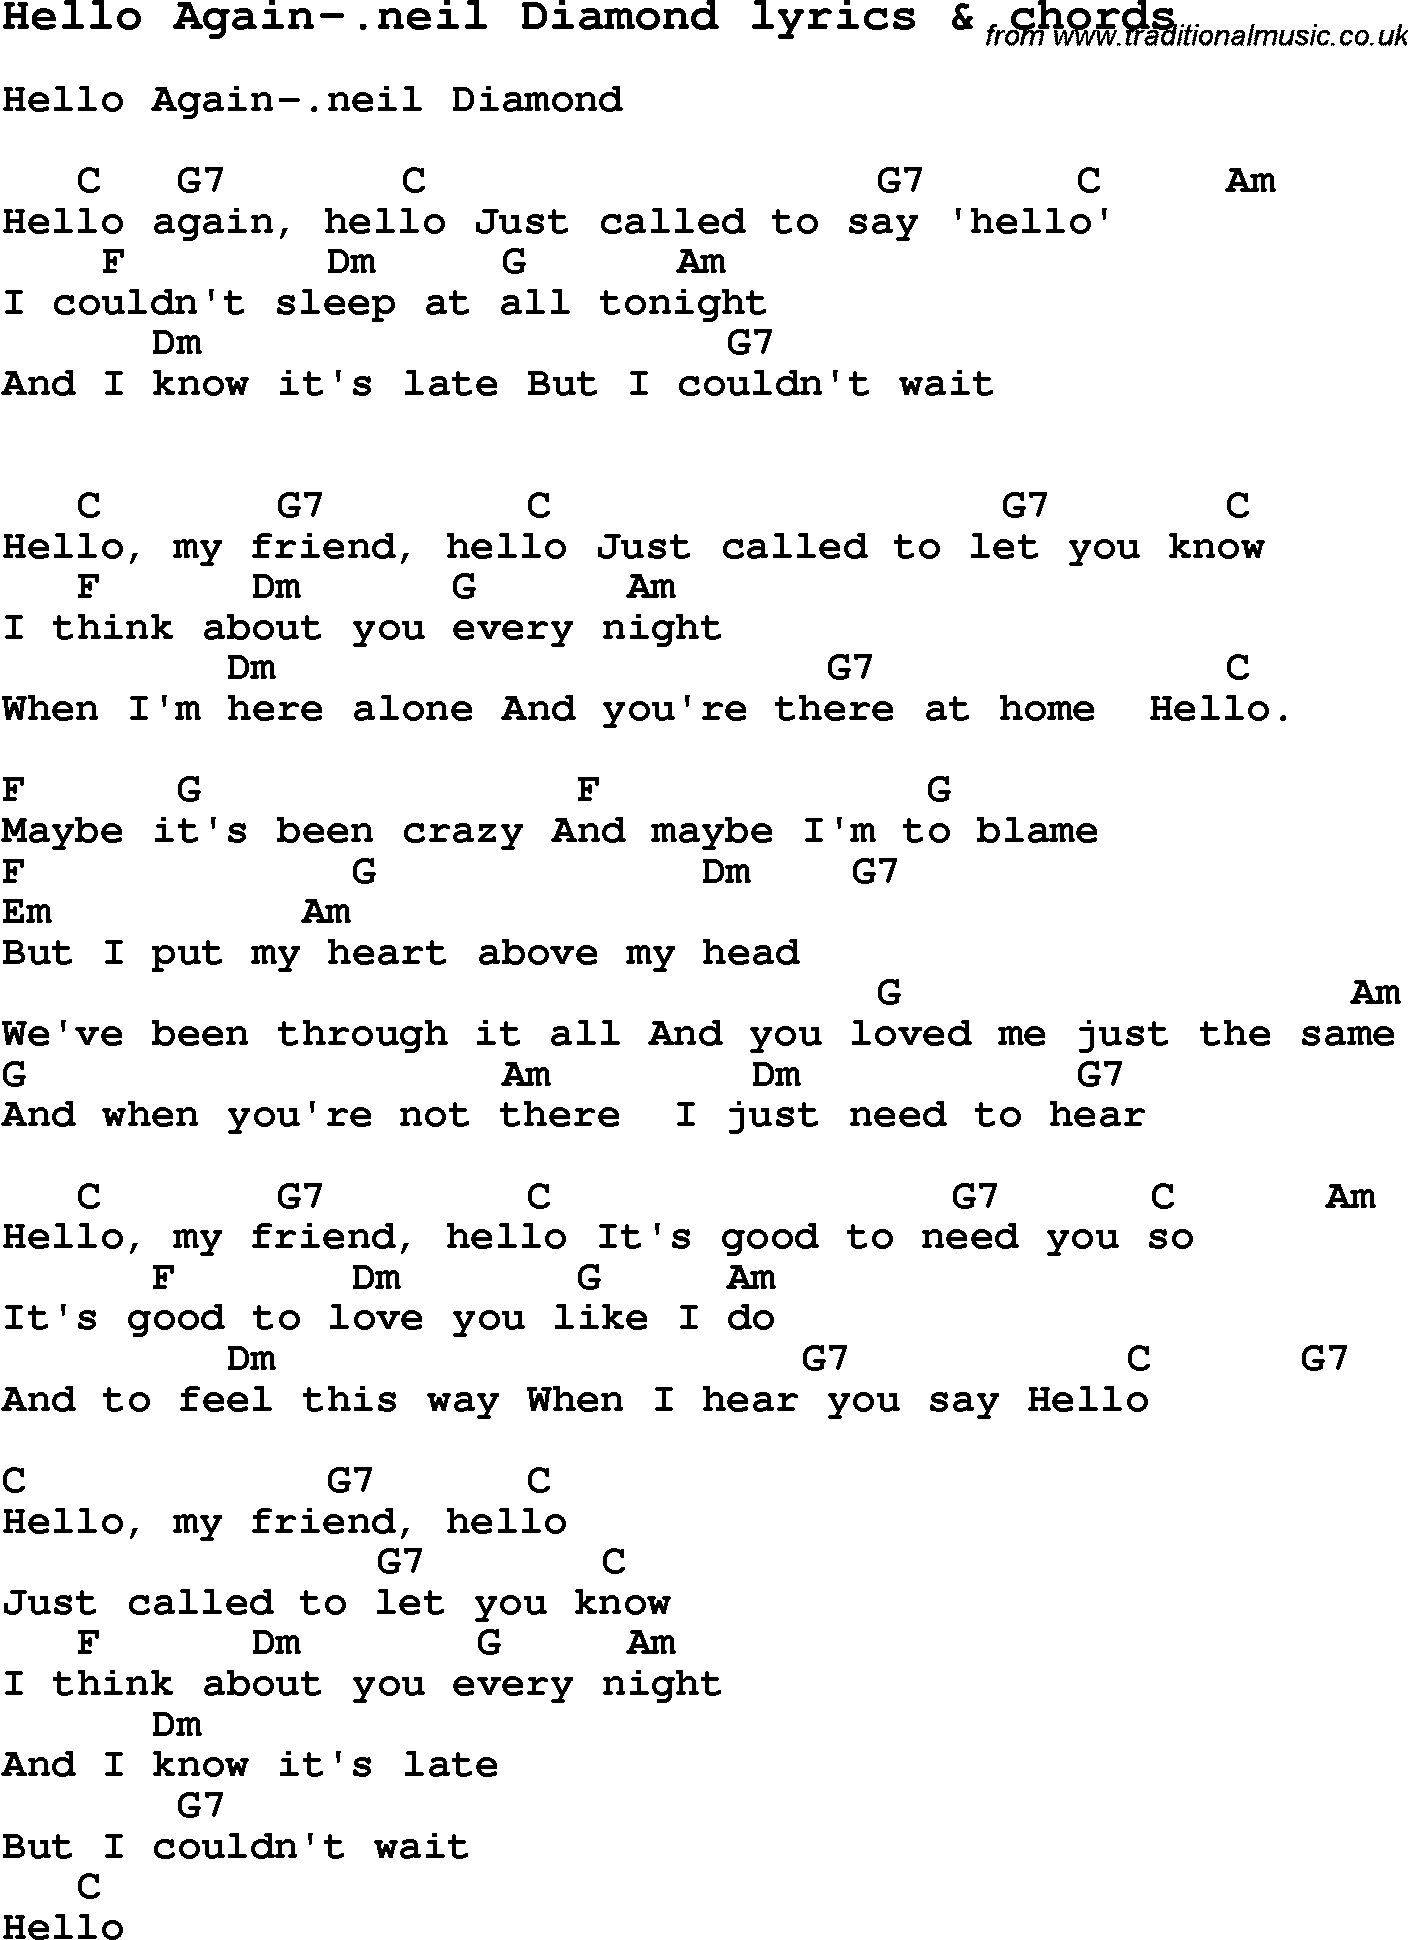 Hello Piano Chords Love Song Lyrics Forhello Again Neil Diamond With Chords